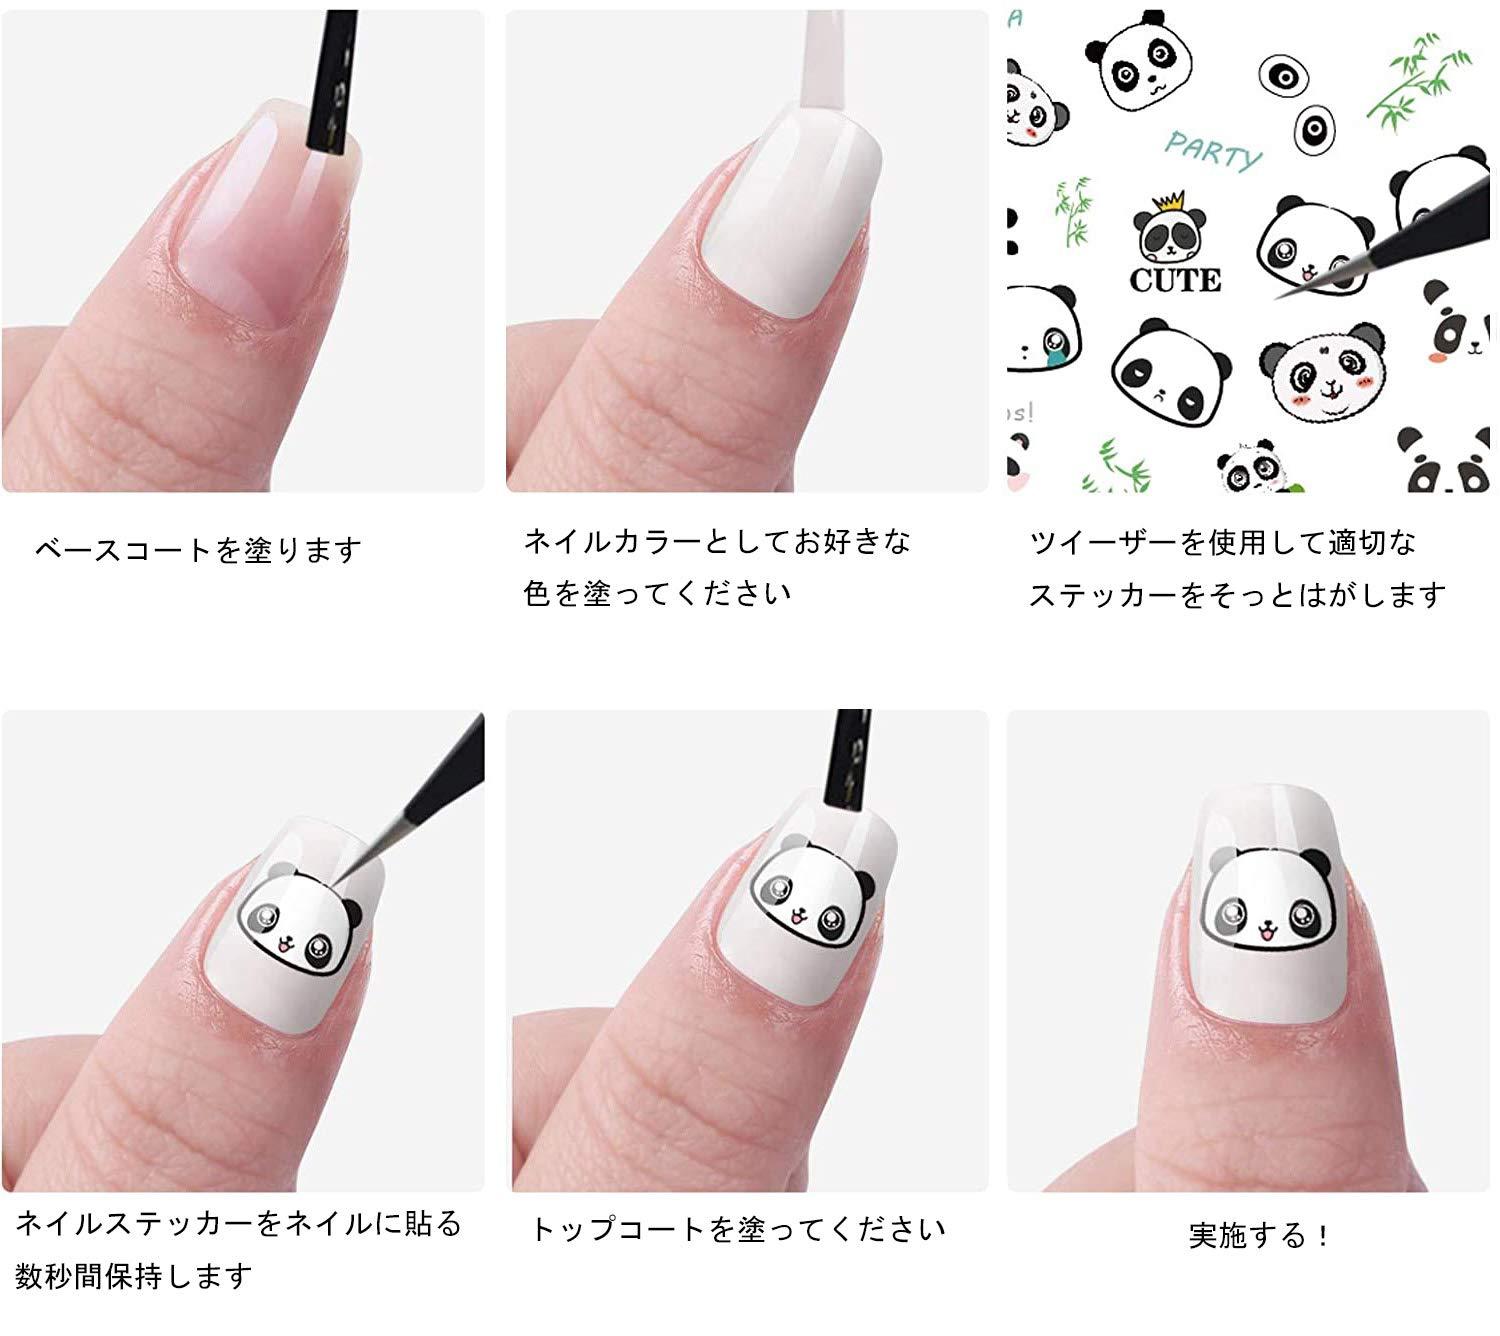 Kawaii Panda Nail Art Stickers - Cute Bamboo Letter Designs For